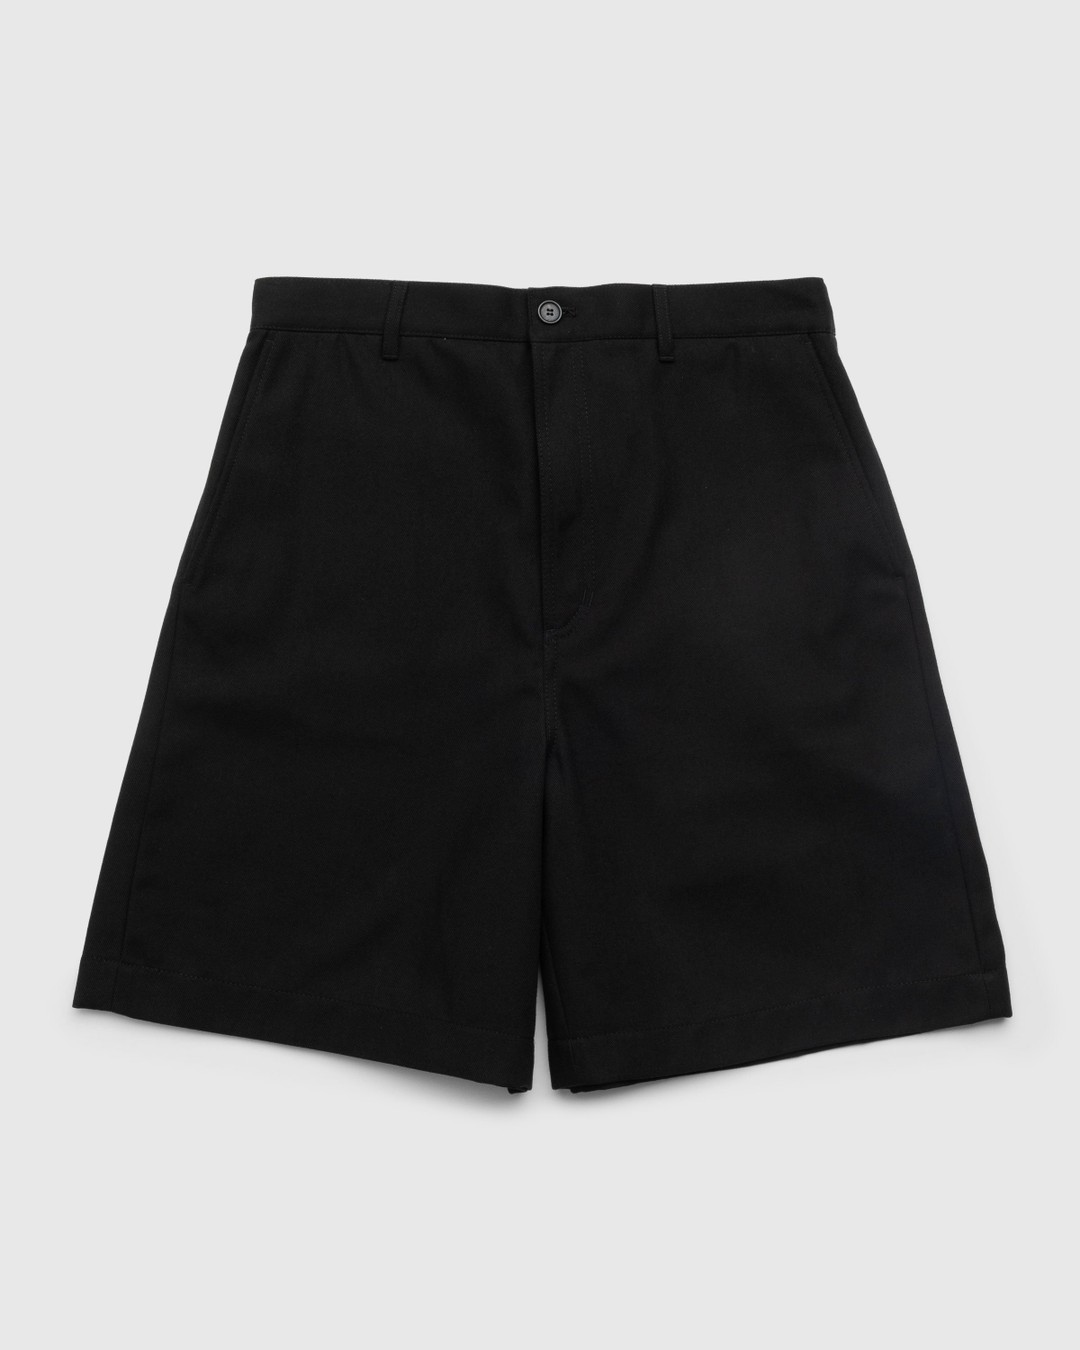 Acne Studios – Regular Fit Shorts Black - Shorts - Black - Image 1